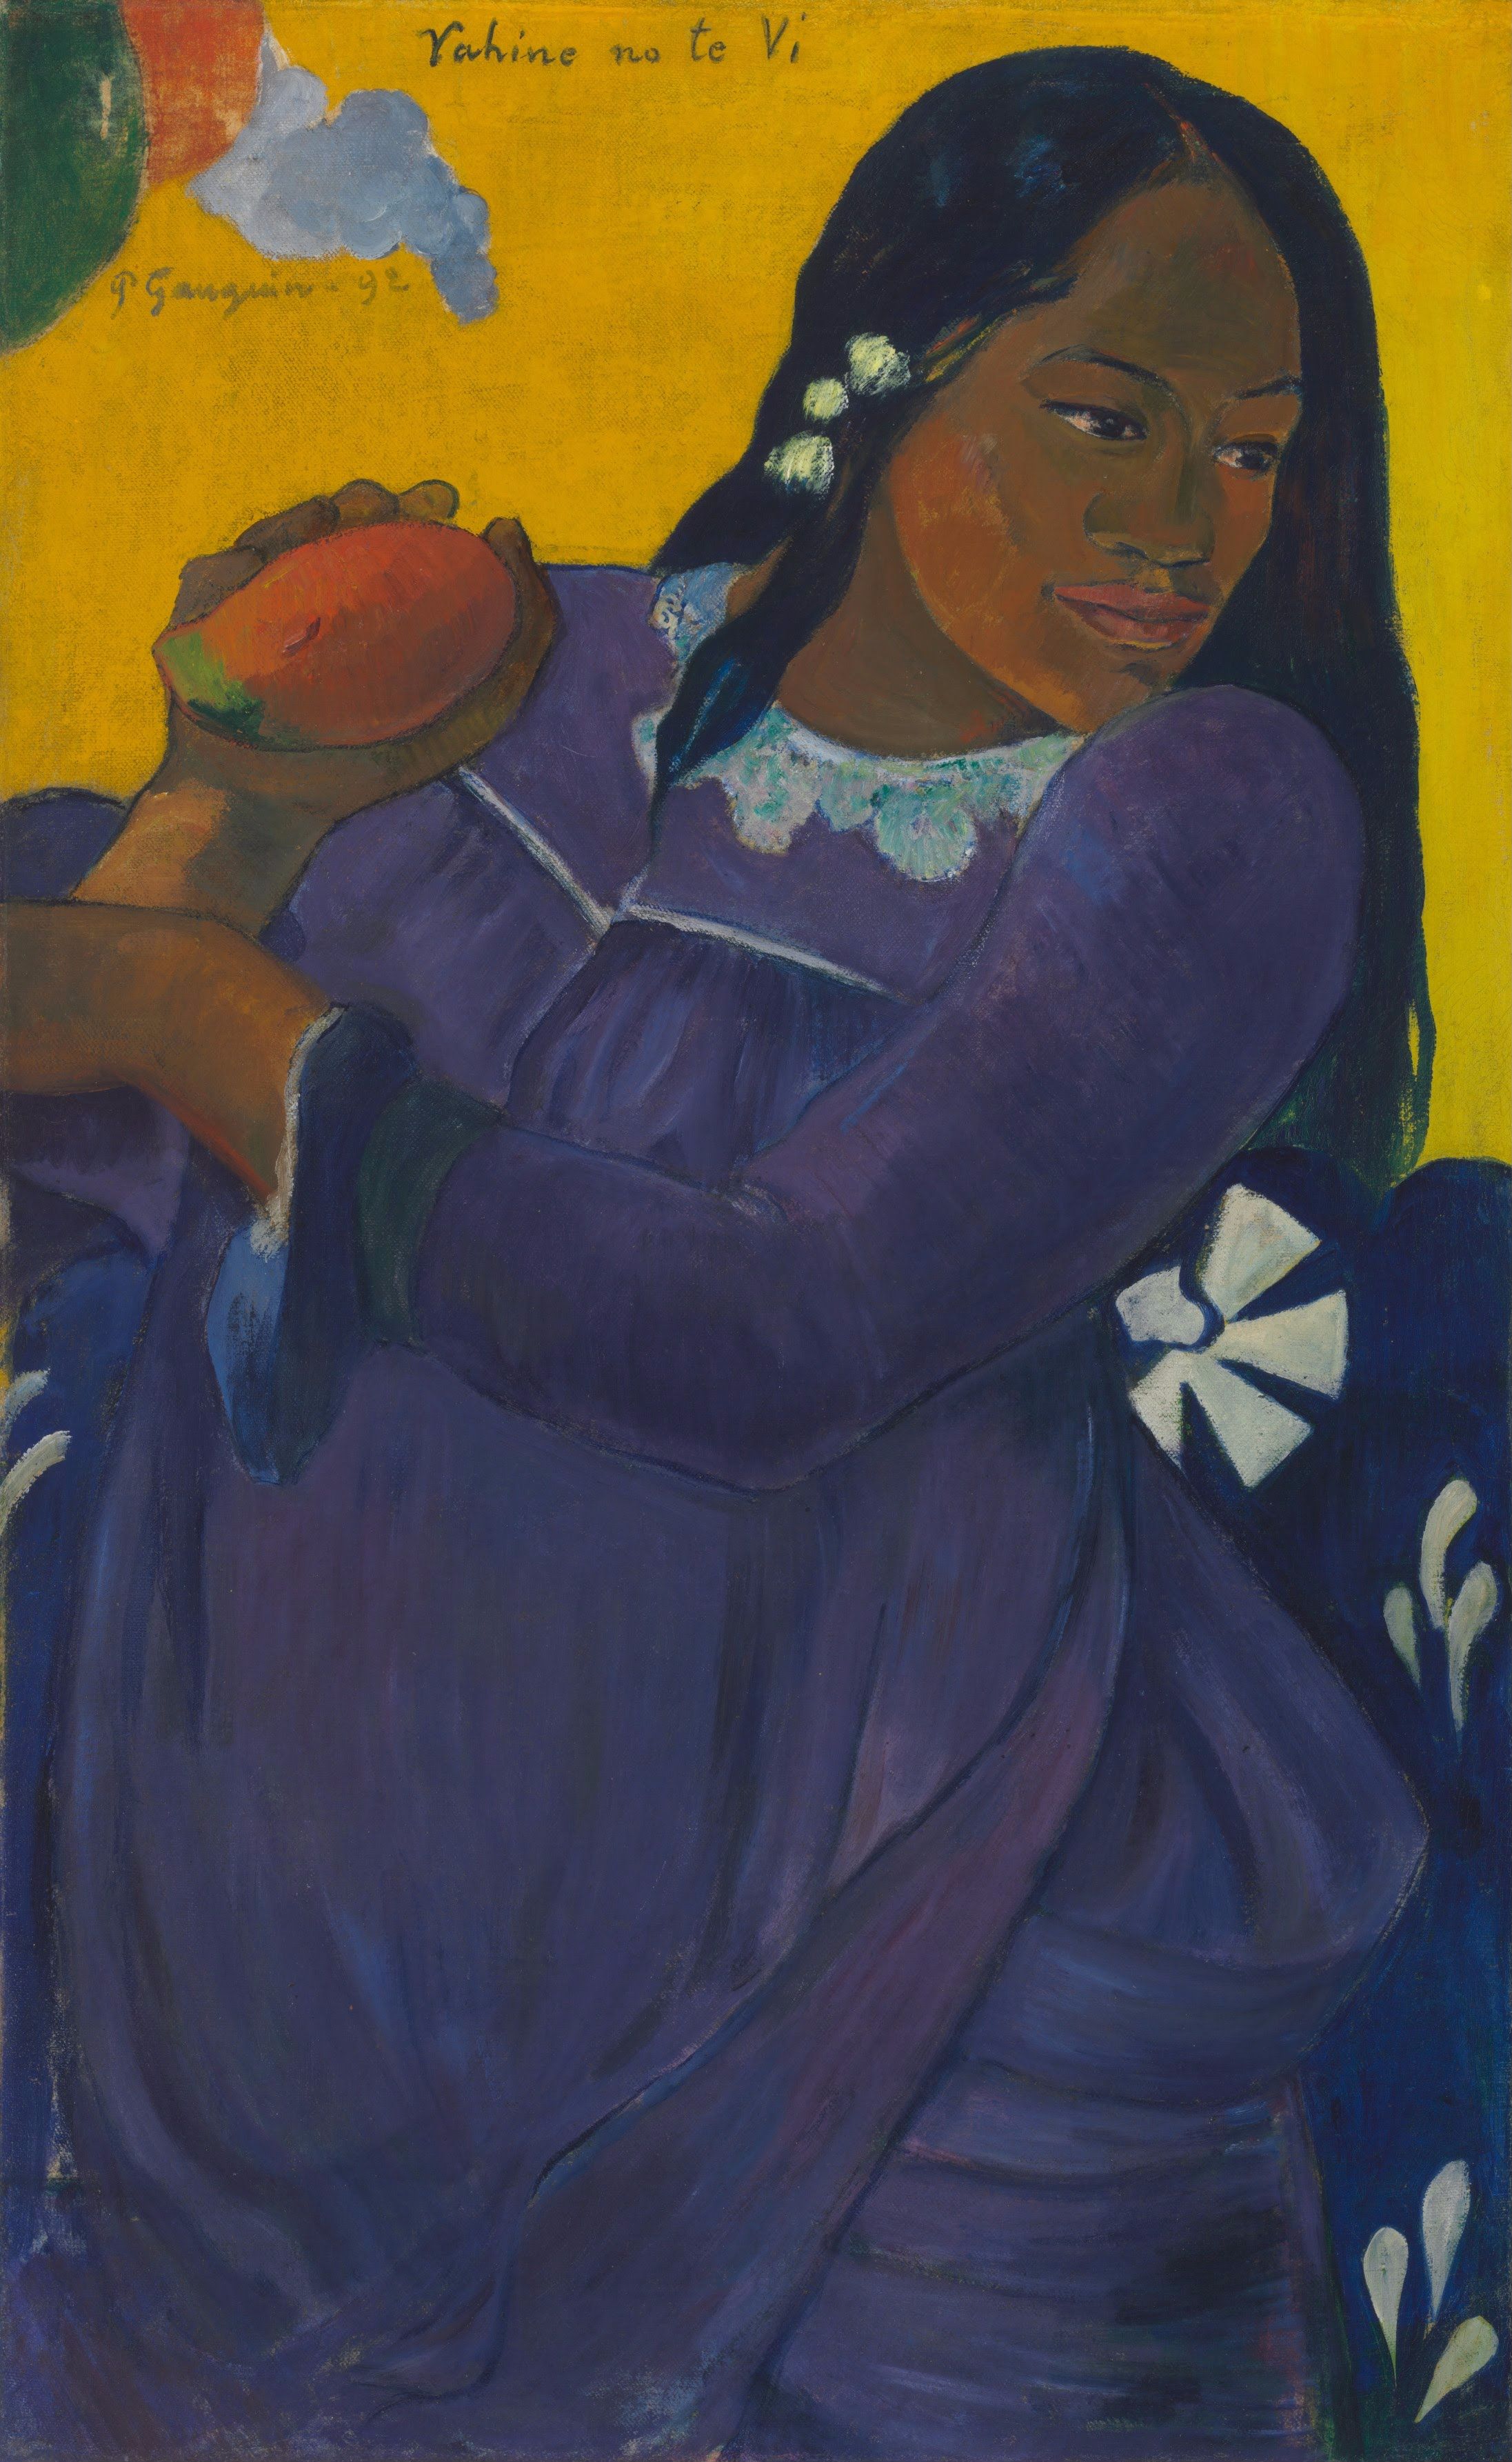 Vahine no te vi (Woman of the Mango) by Paul Gauguin - 1892 - 193.5 x 103 cm Baltimore Museum of Art